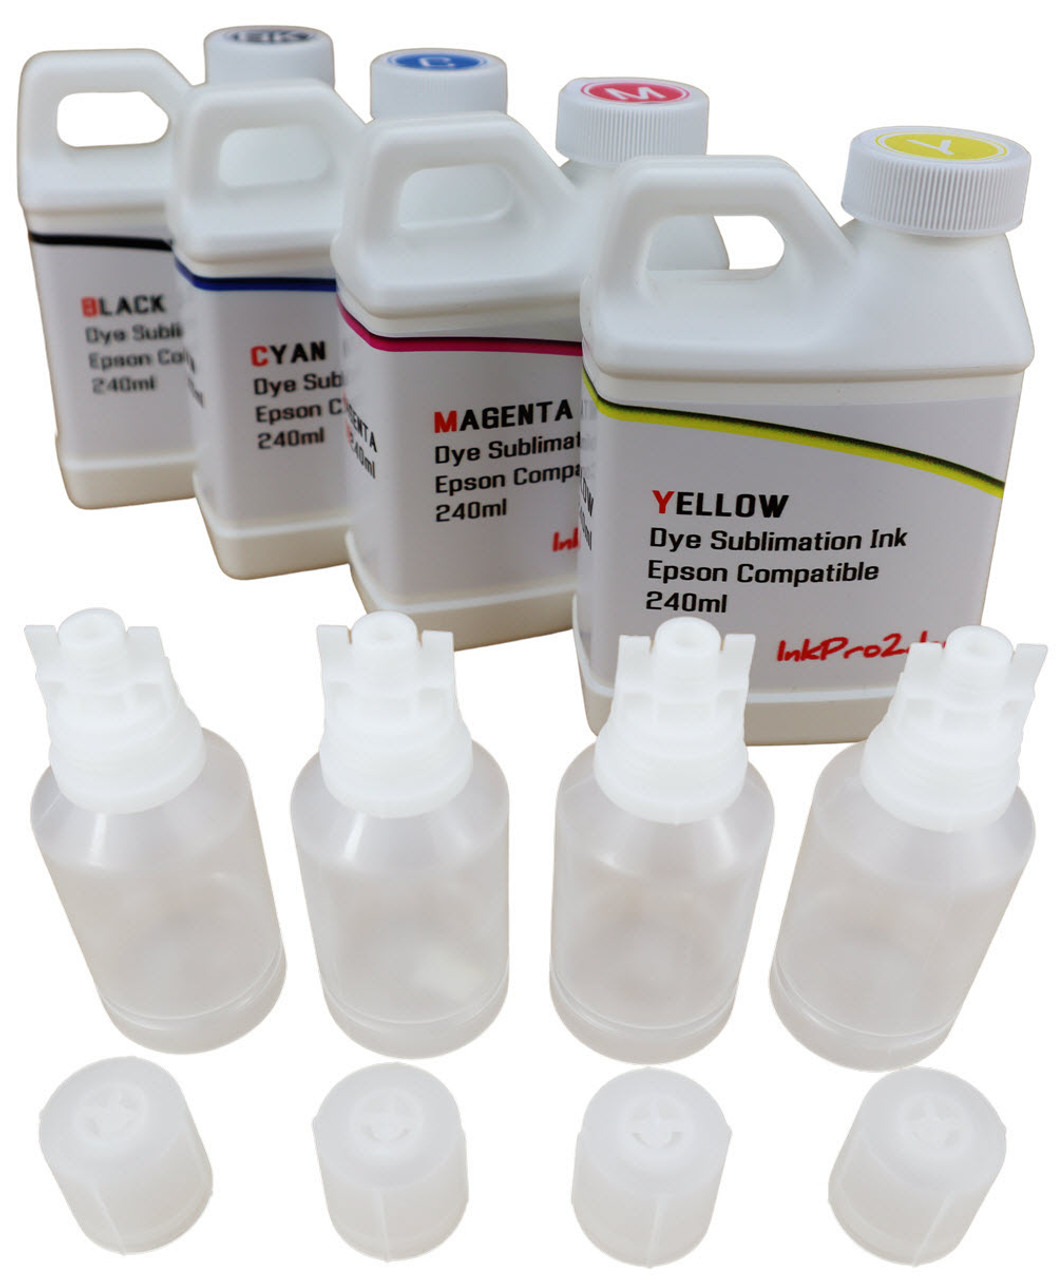 Dye Sublimation Ink 4- 240ml bottles with 4- 135ml bottles (empty) to fill the printer for Epson EcoTank ET-2400 Printer